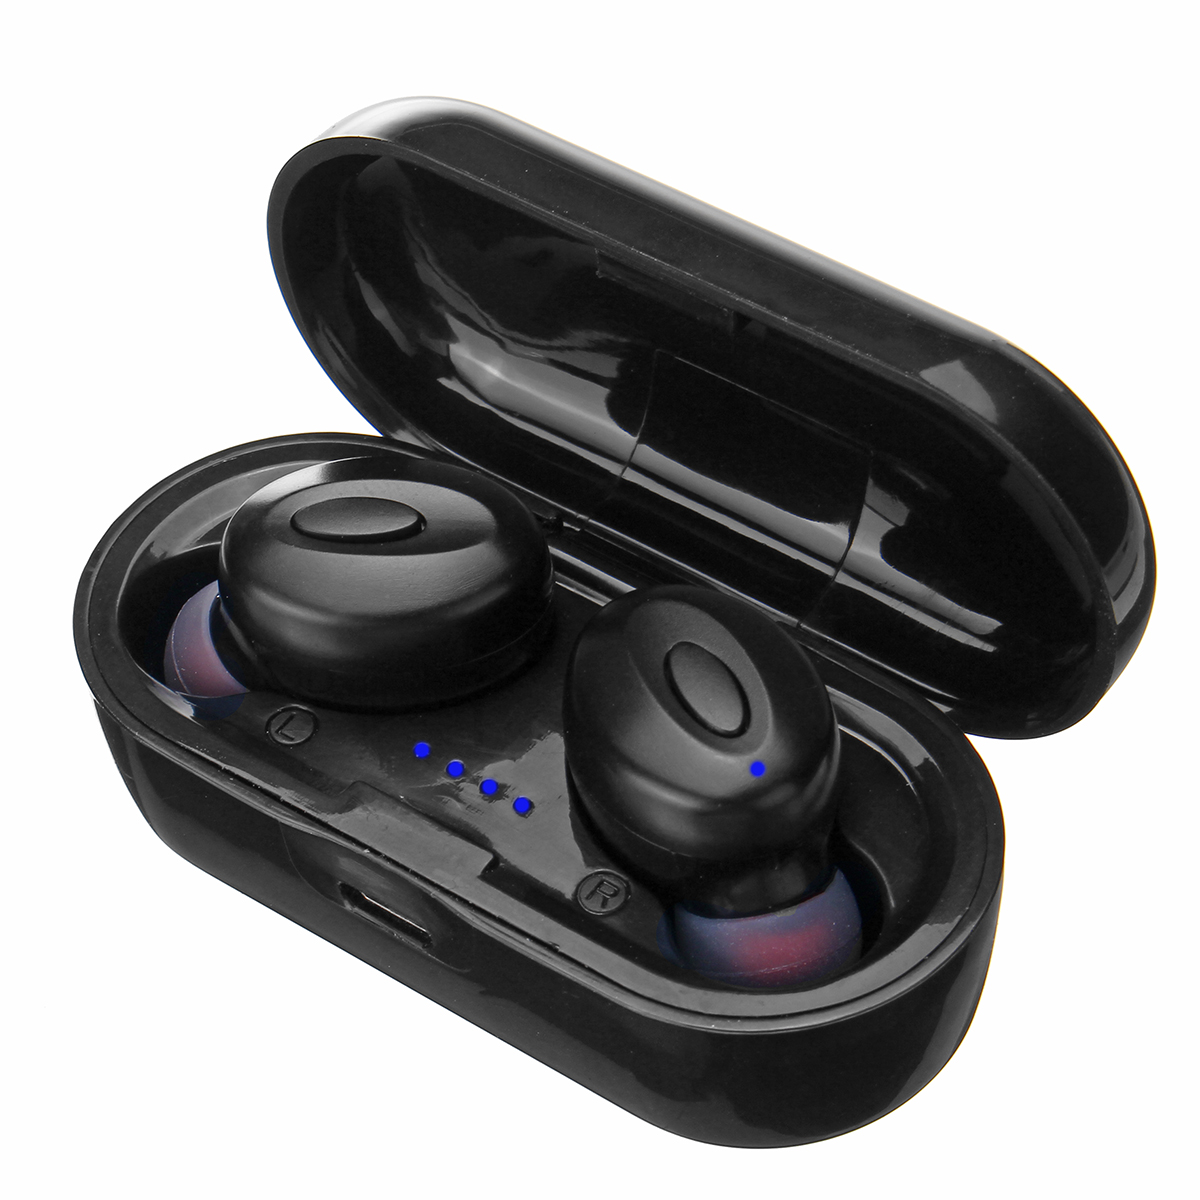 

XG15 TWS Wireless bluetooth 5.0 Earphone IPX5 Waterproof Stereo Headphone Earbuds with Mic